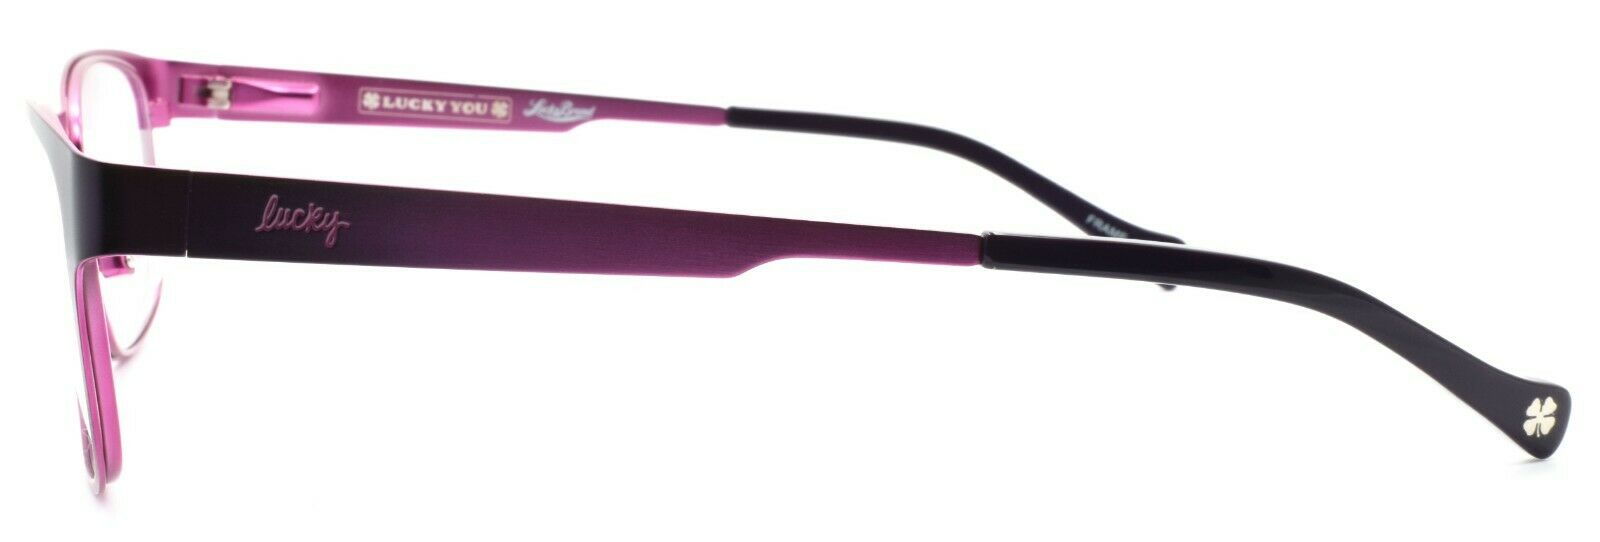 3-LUCKY BRAND Pacific Women's Eyeglasses Frames 51-18-140 Purple Gradient + CASE-751286256536-IKSpecs